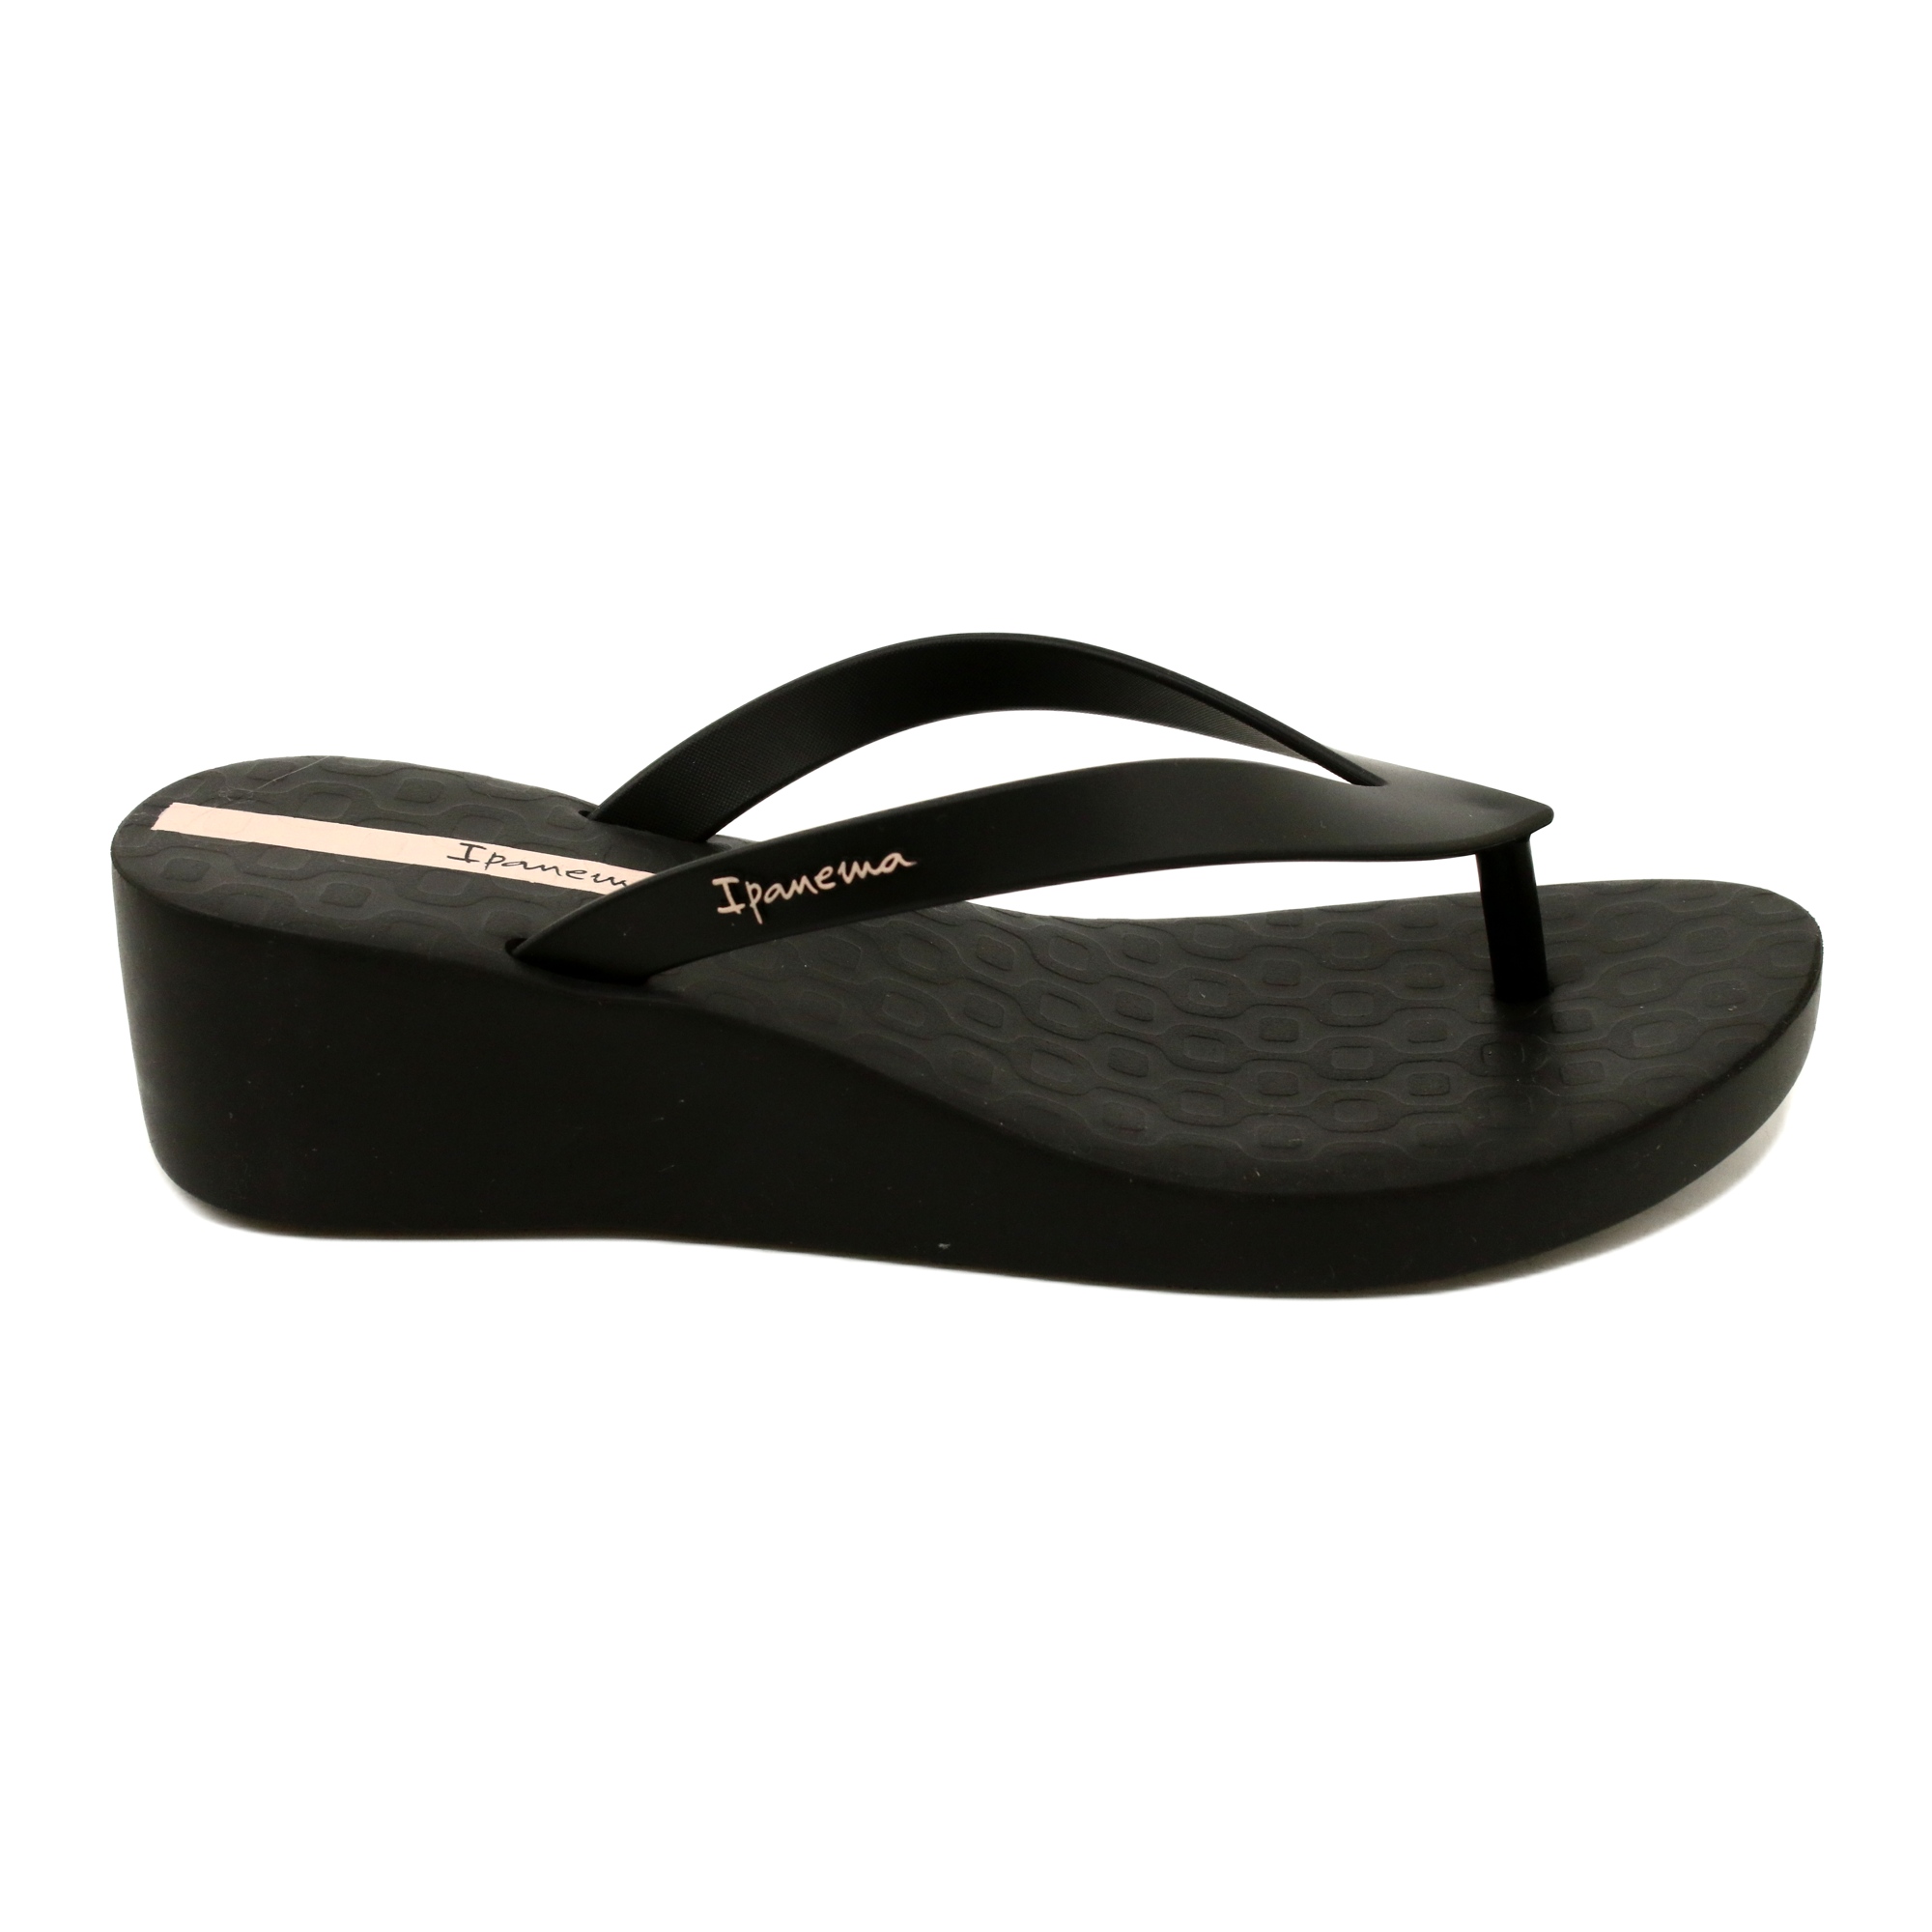 Ipamema | Fashion shoes heels, Stylish sandals, Black flip flops